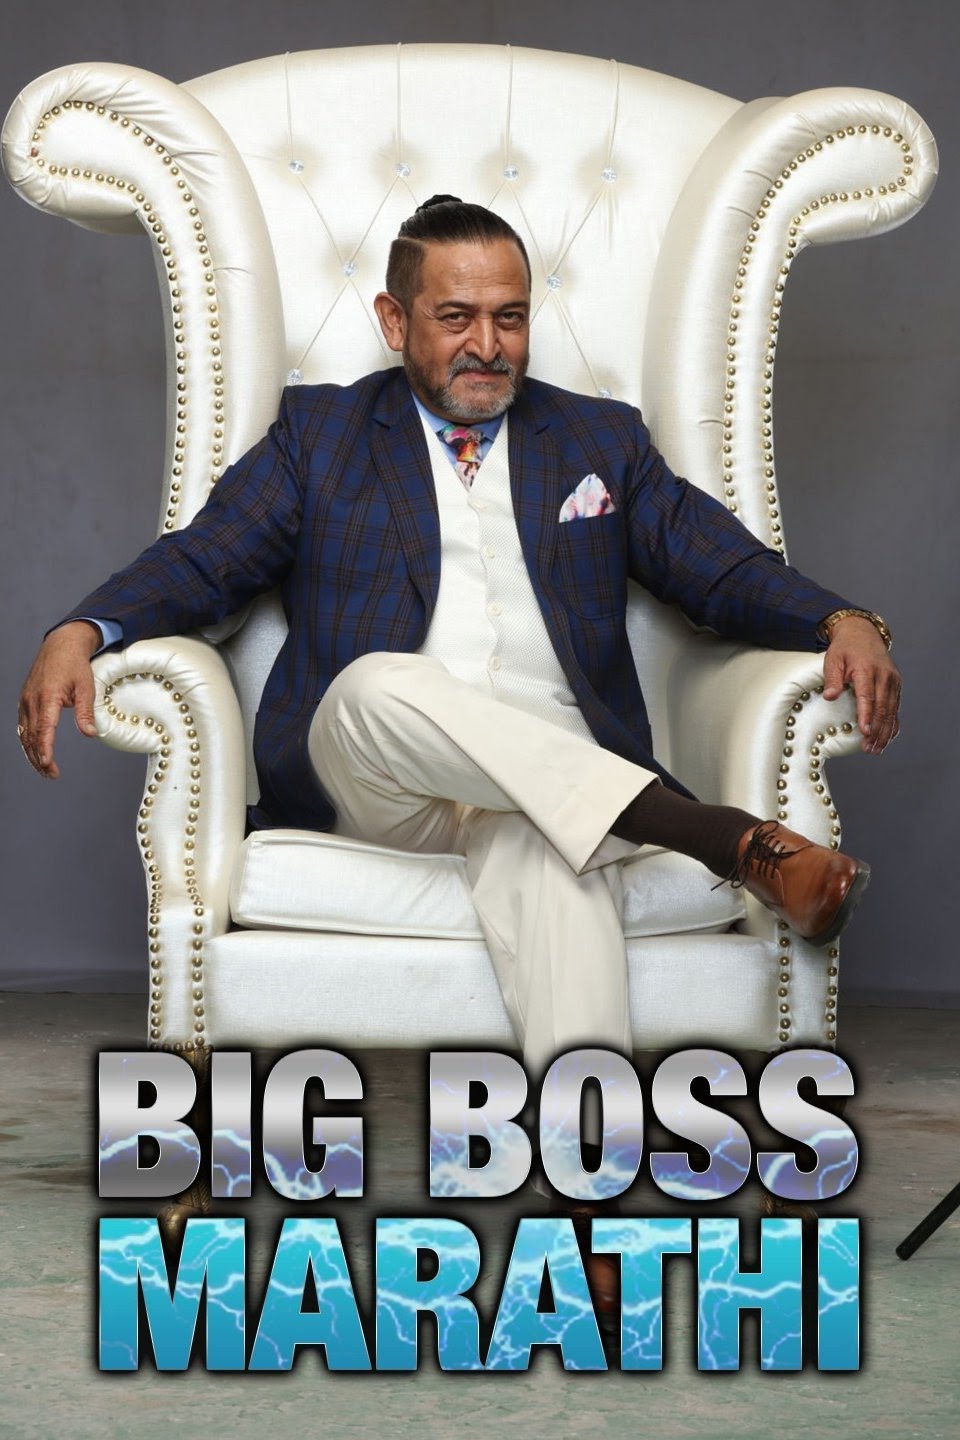 TV ratings for Bigg Boss Marathi in Turkey. Colors Marathi TV series